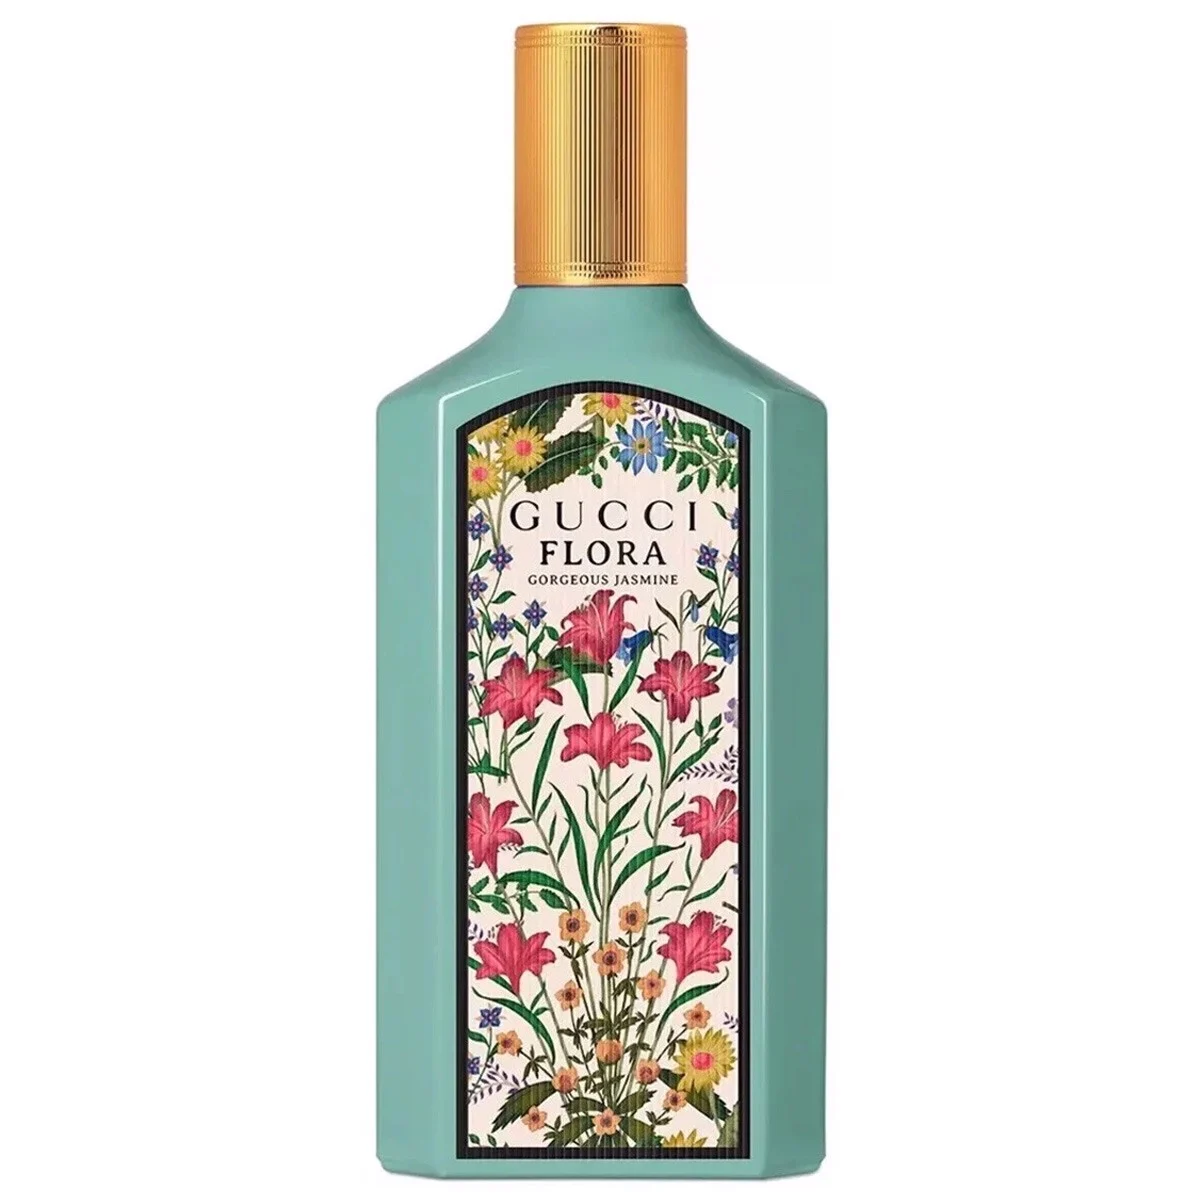 Nước hoa Gucci Flora Gorgeous Jasmine